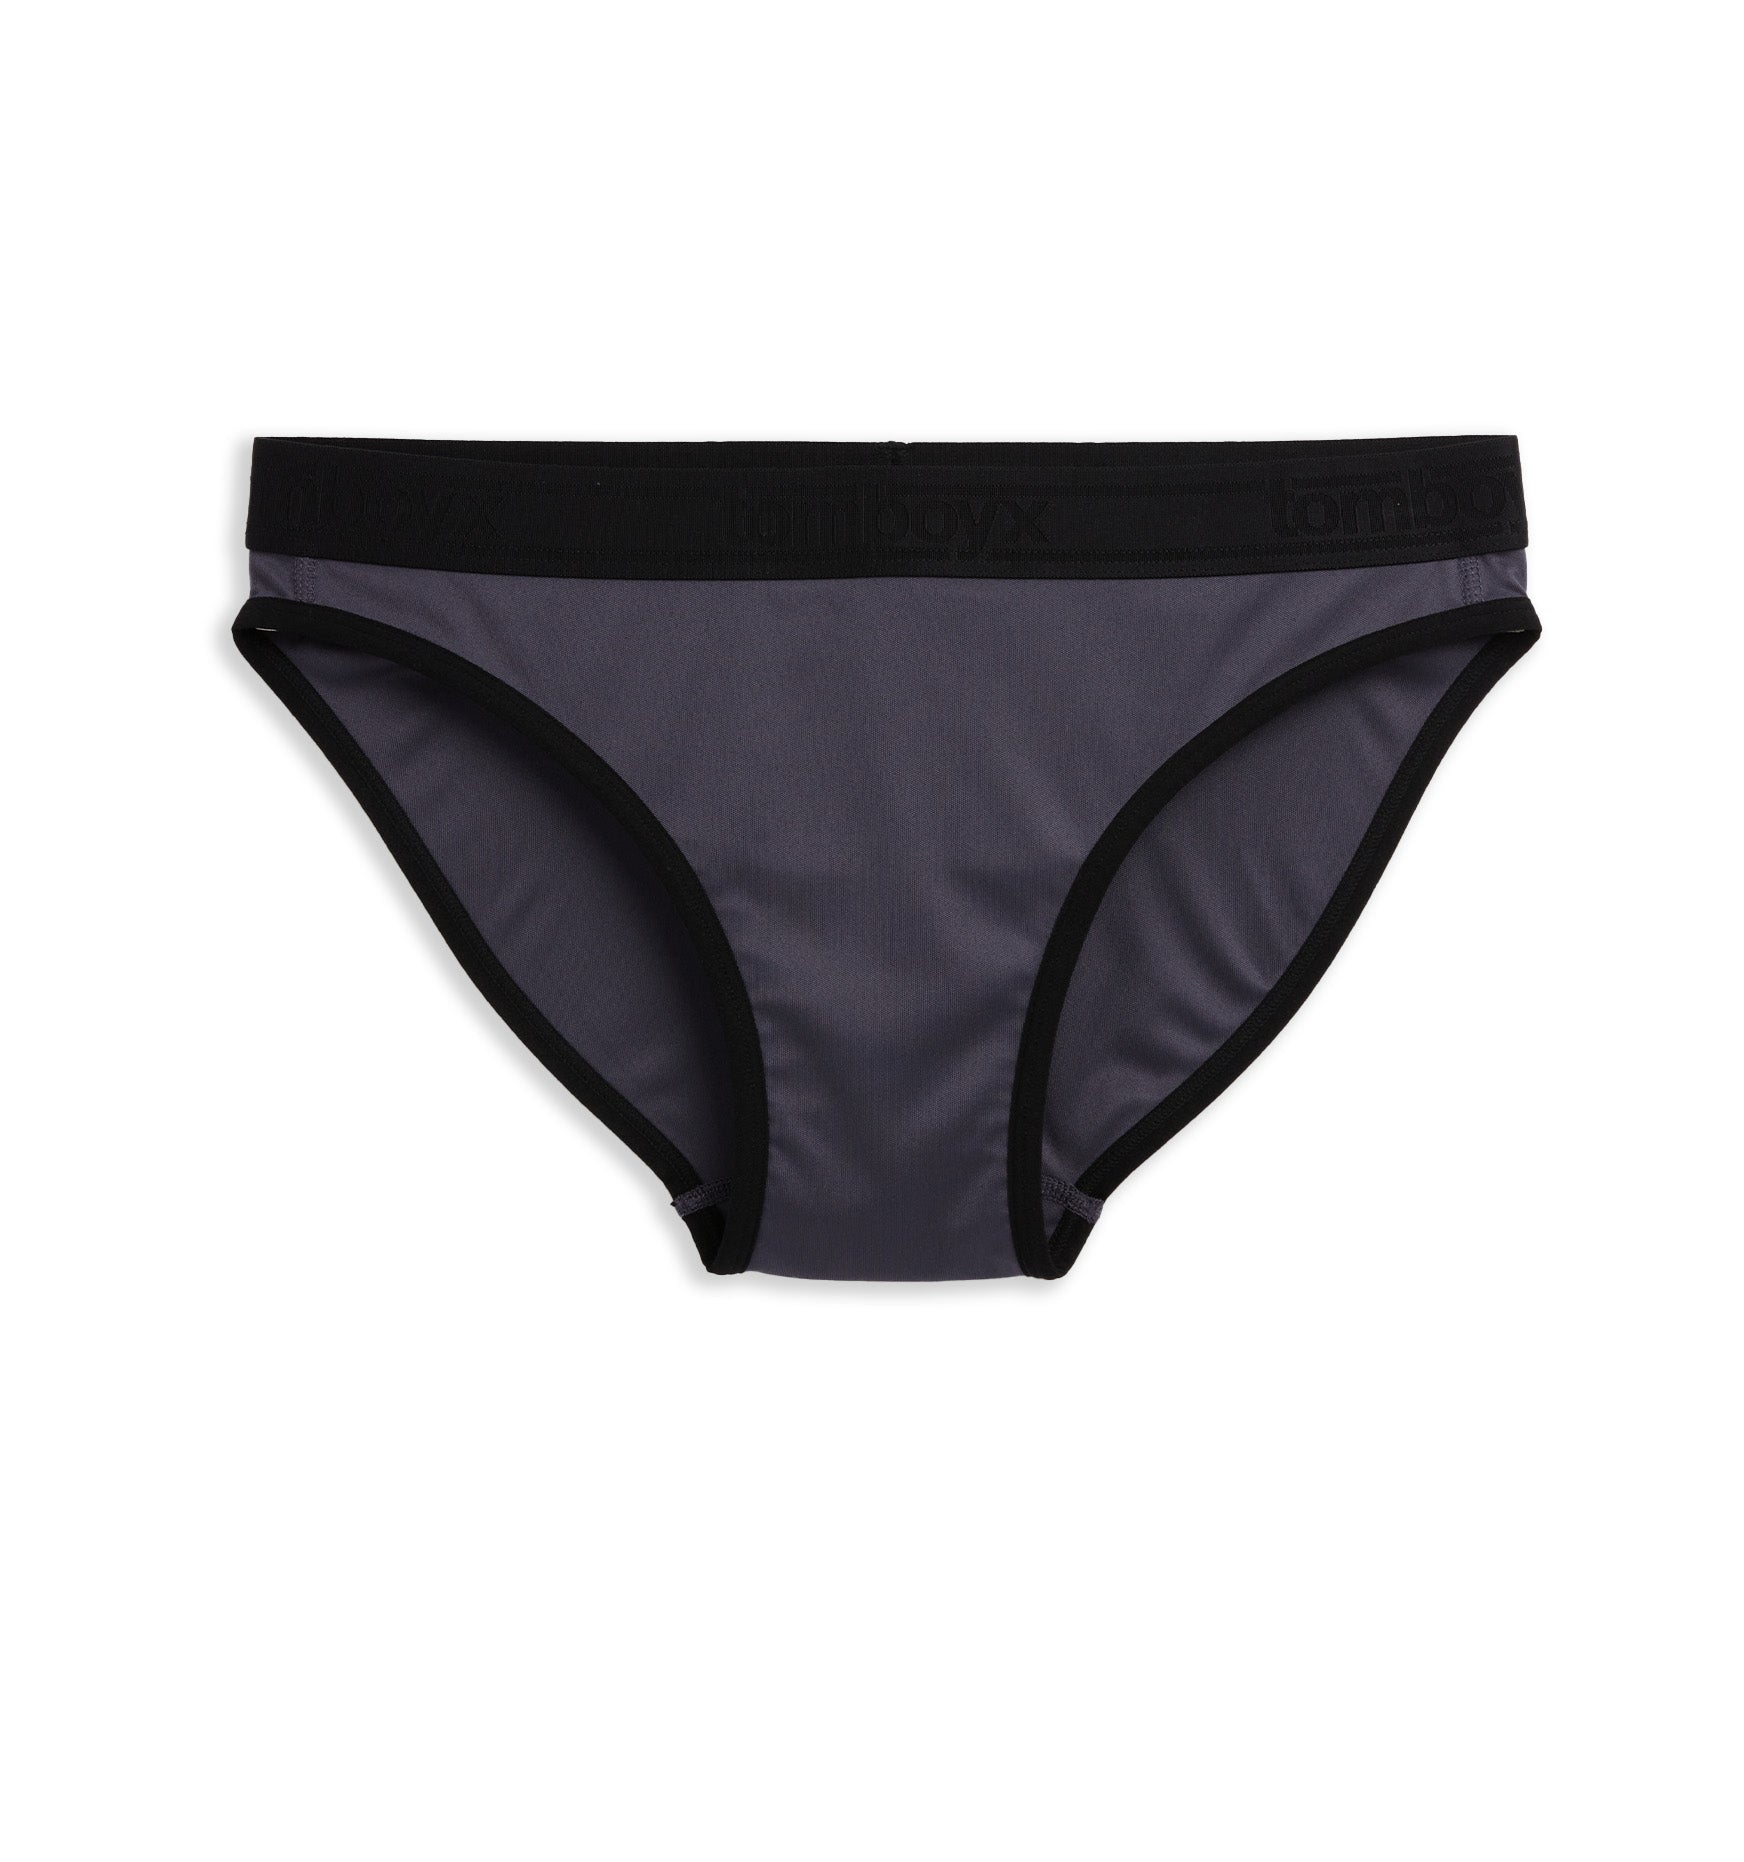 GWAABD Tomboy Underwear for Women Panty Cotton Panties Girls Sports  Lingerie Briefs Female Women's Underwear